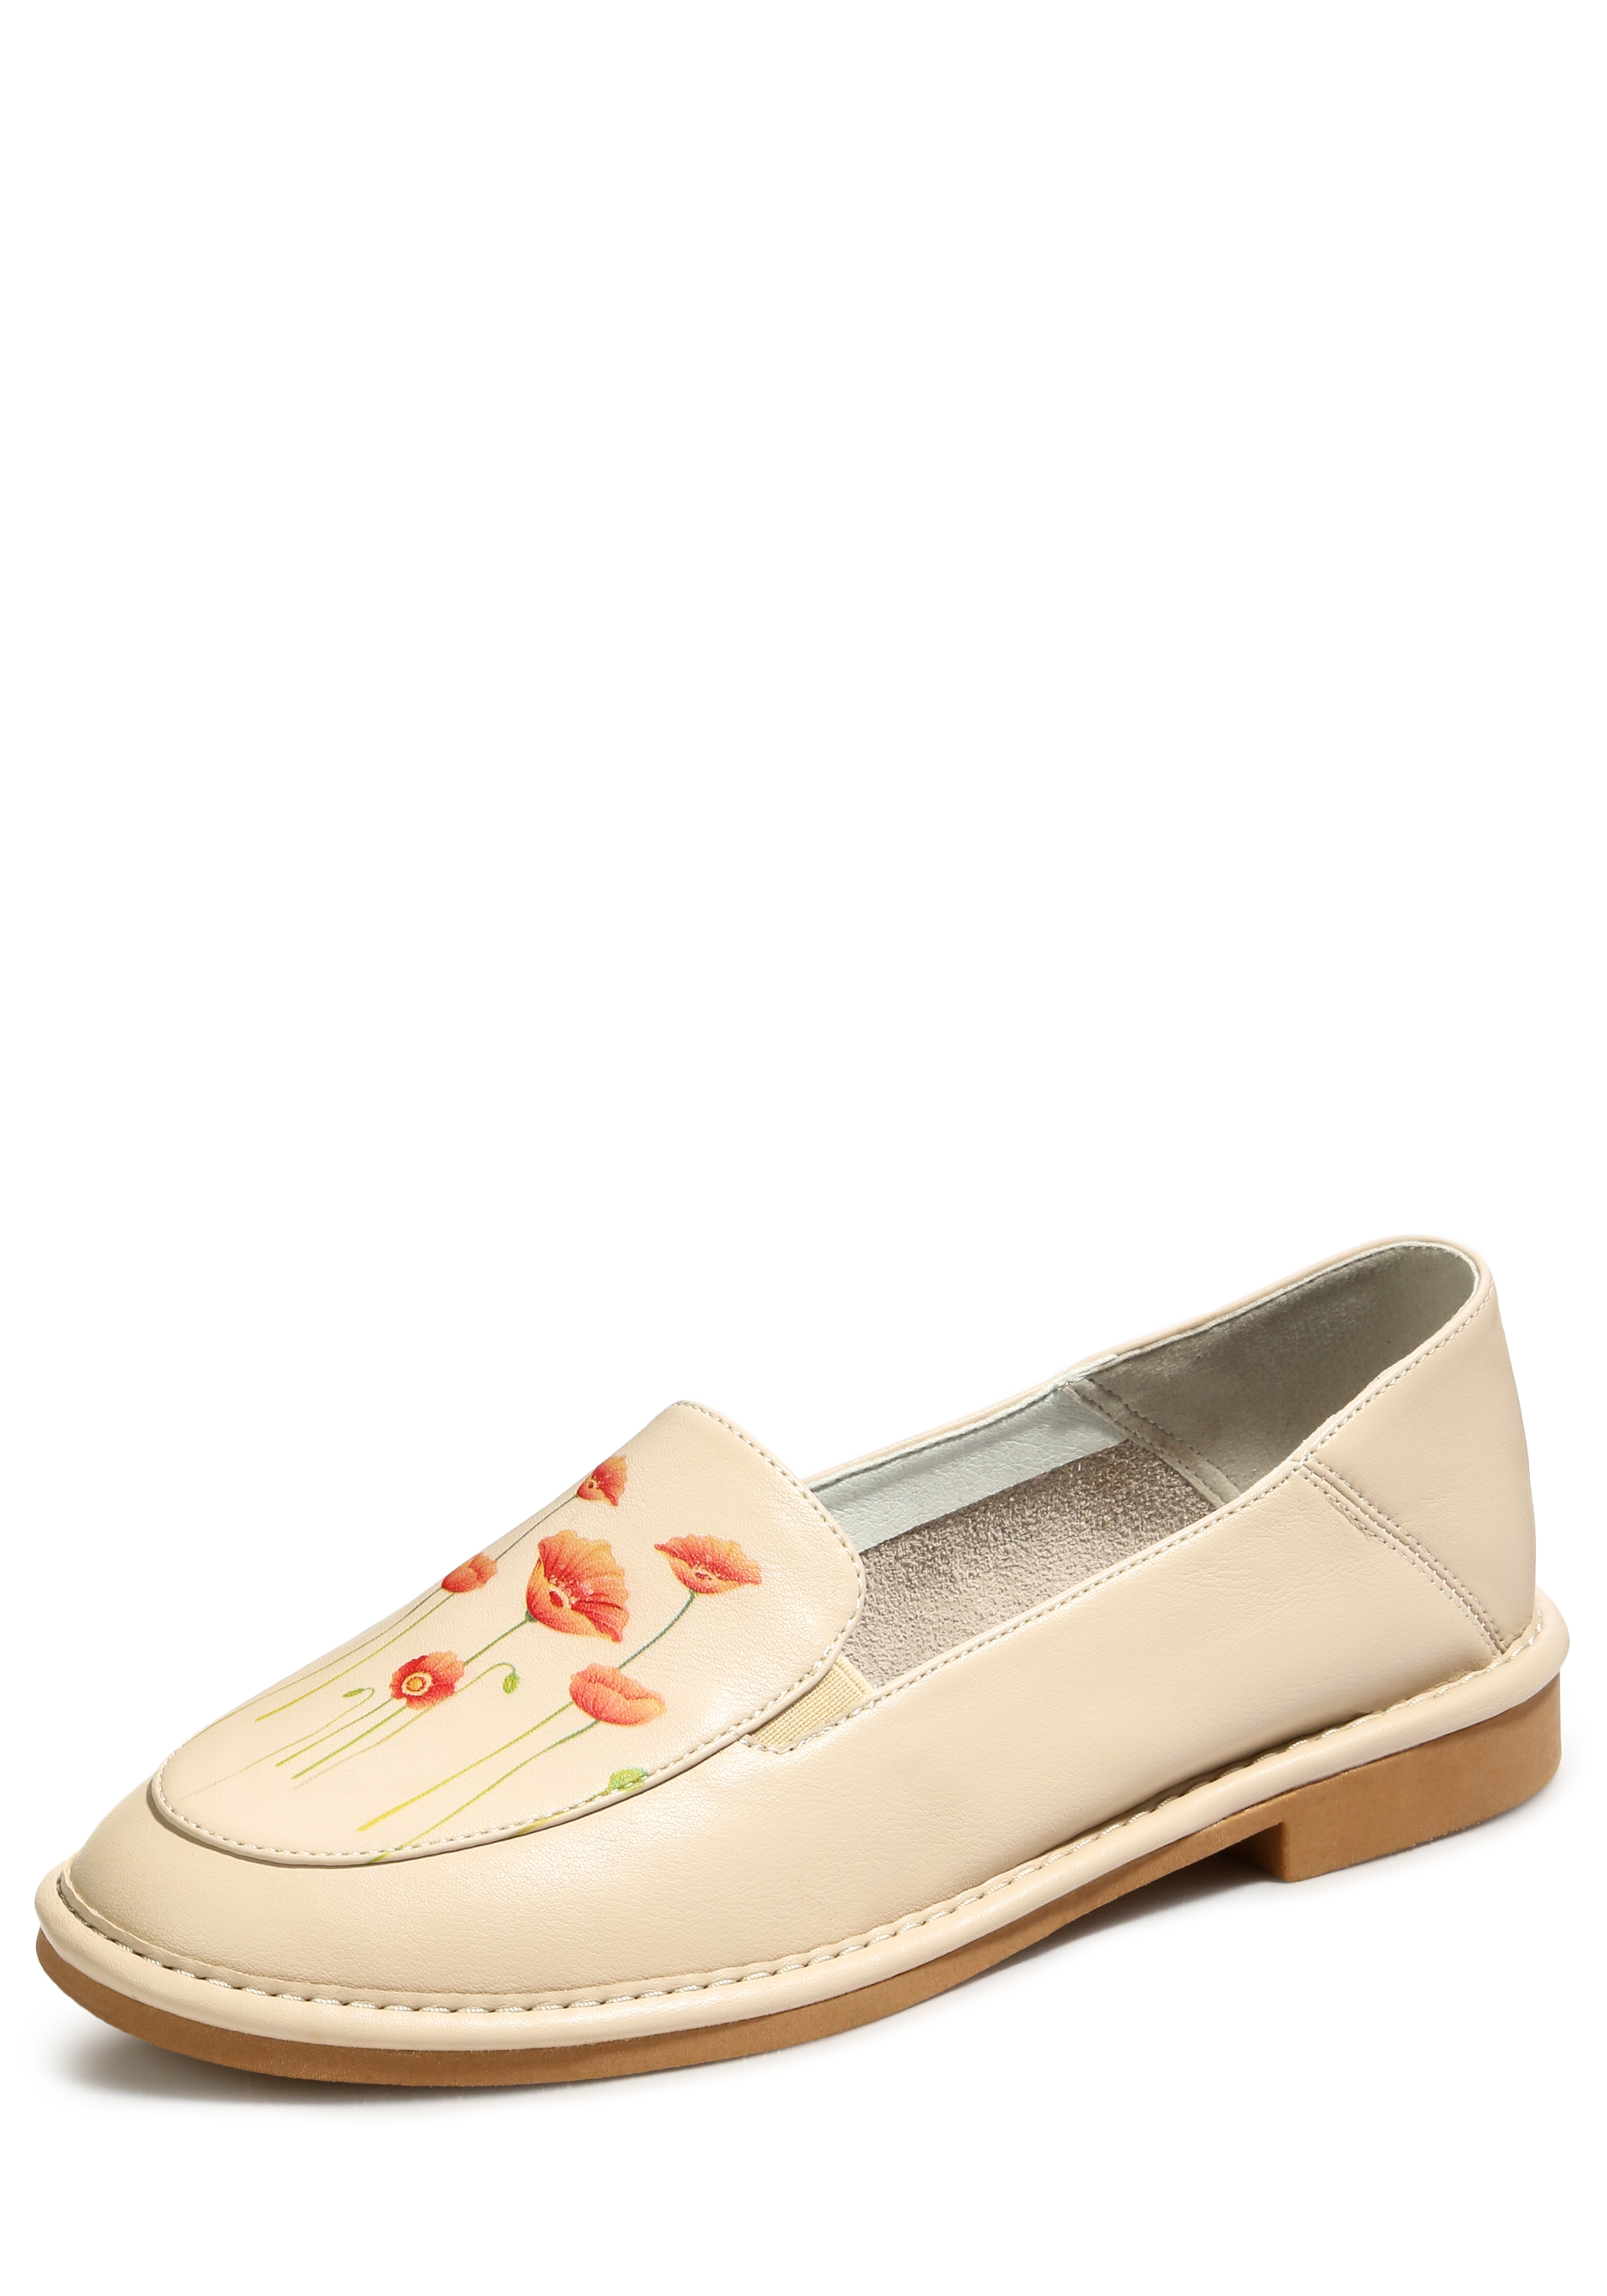 Туфли женские "Лили" KUMFO, цвет бежевый, размер 39 - фото 6